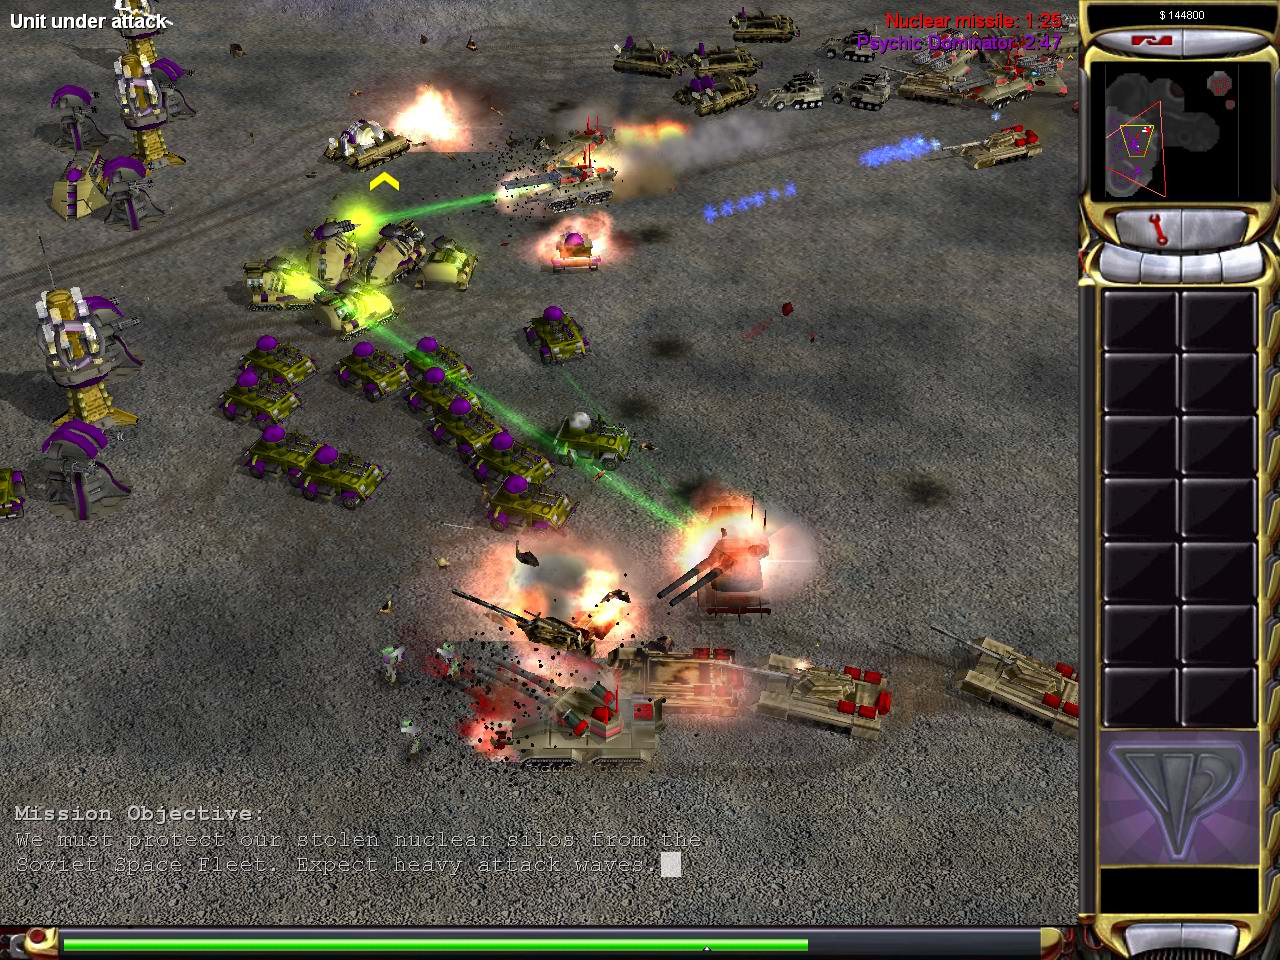 The Final Showdown image - Red Alert 3 mod for C&C: Generals Zero Hour.